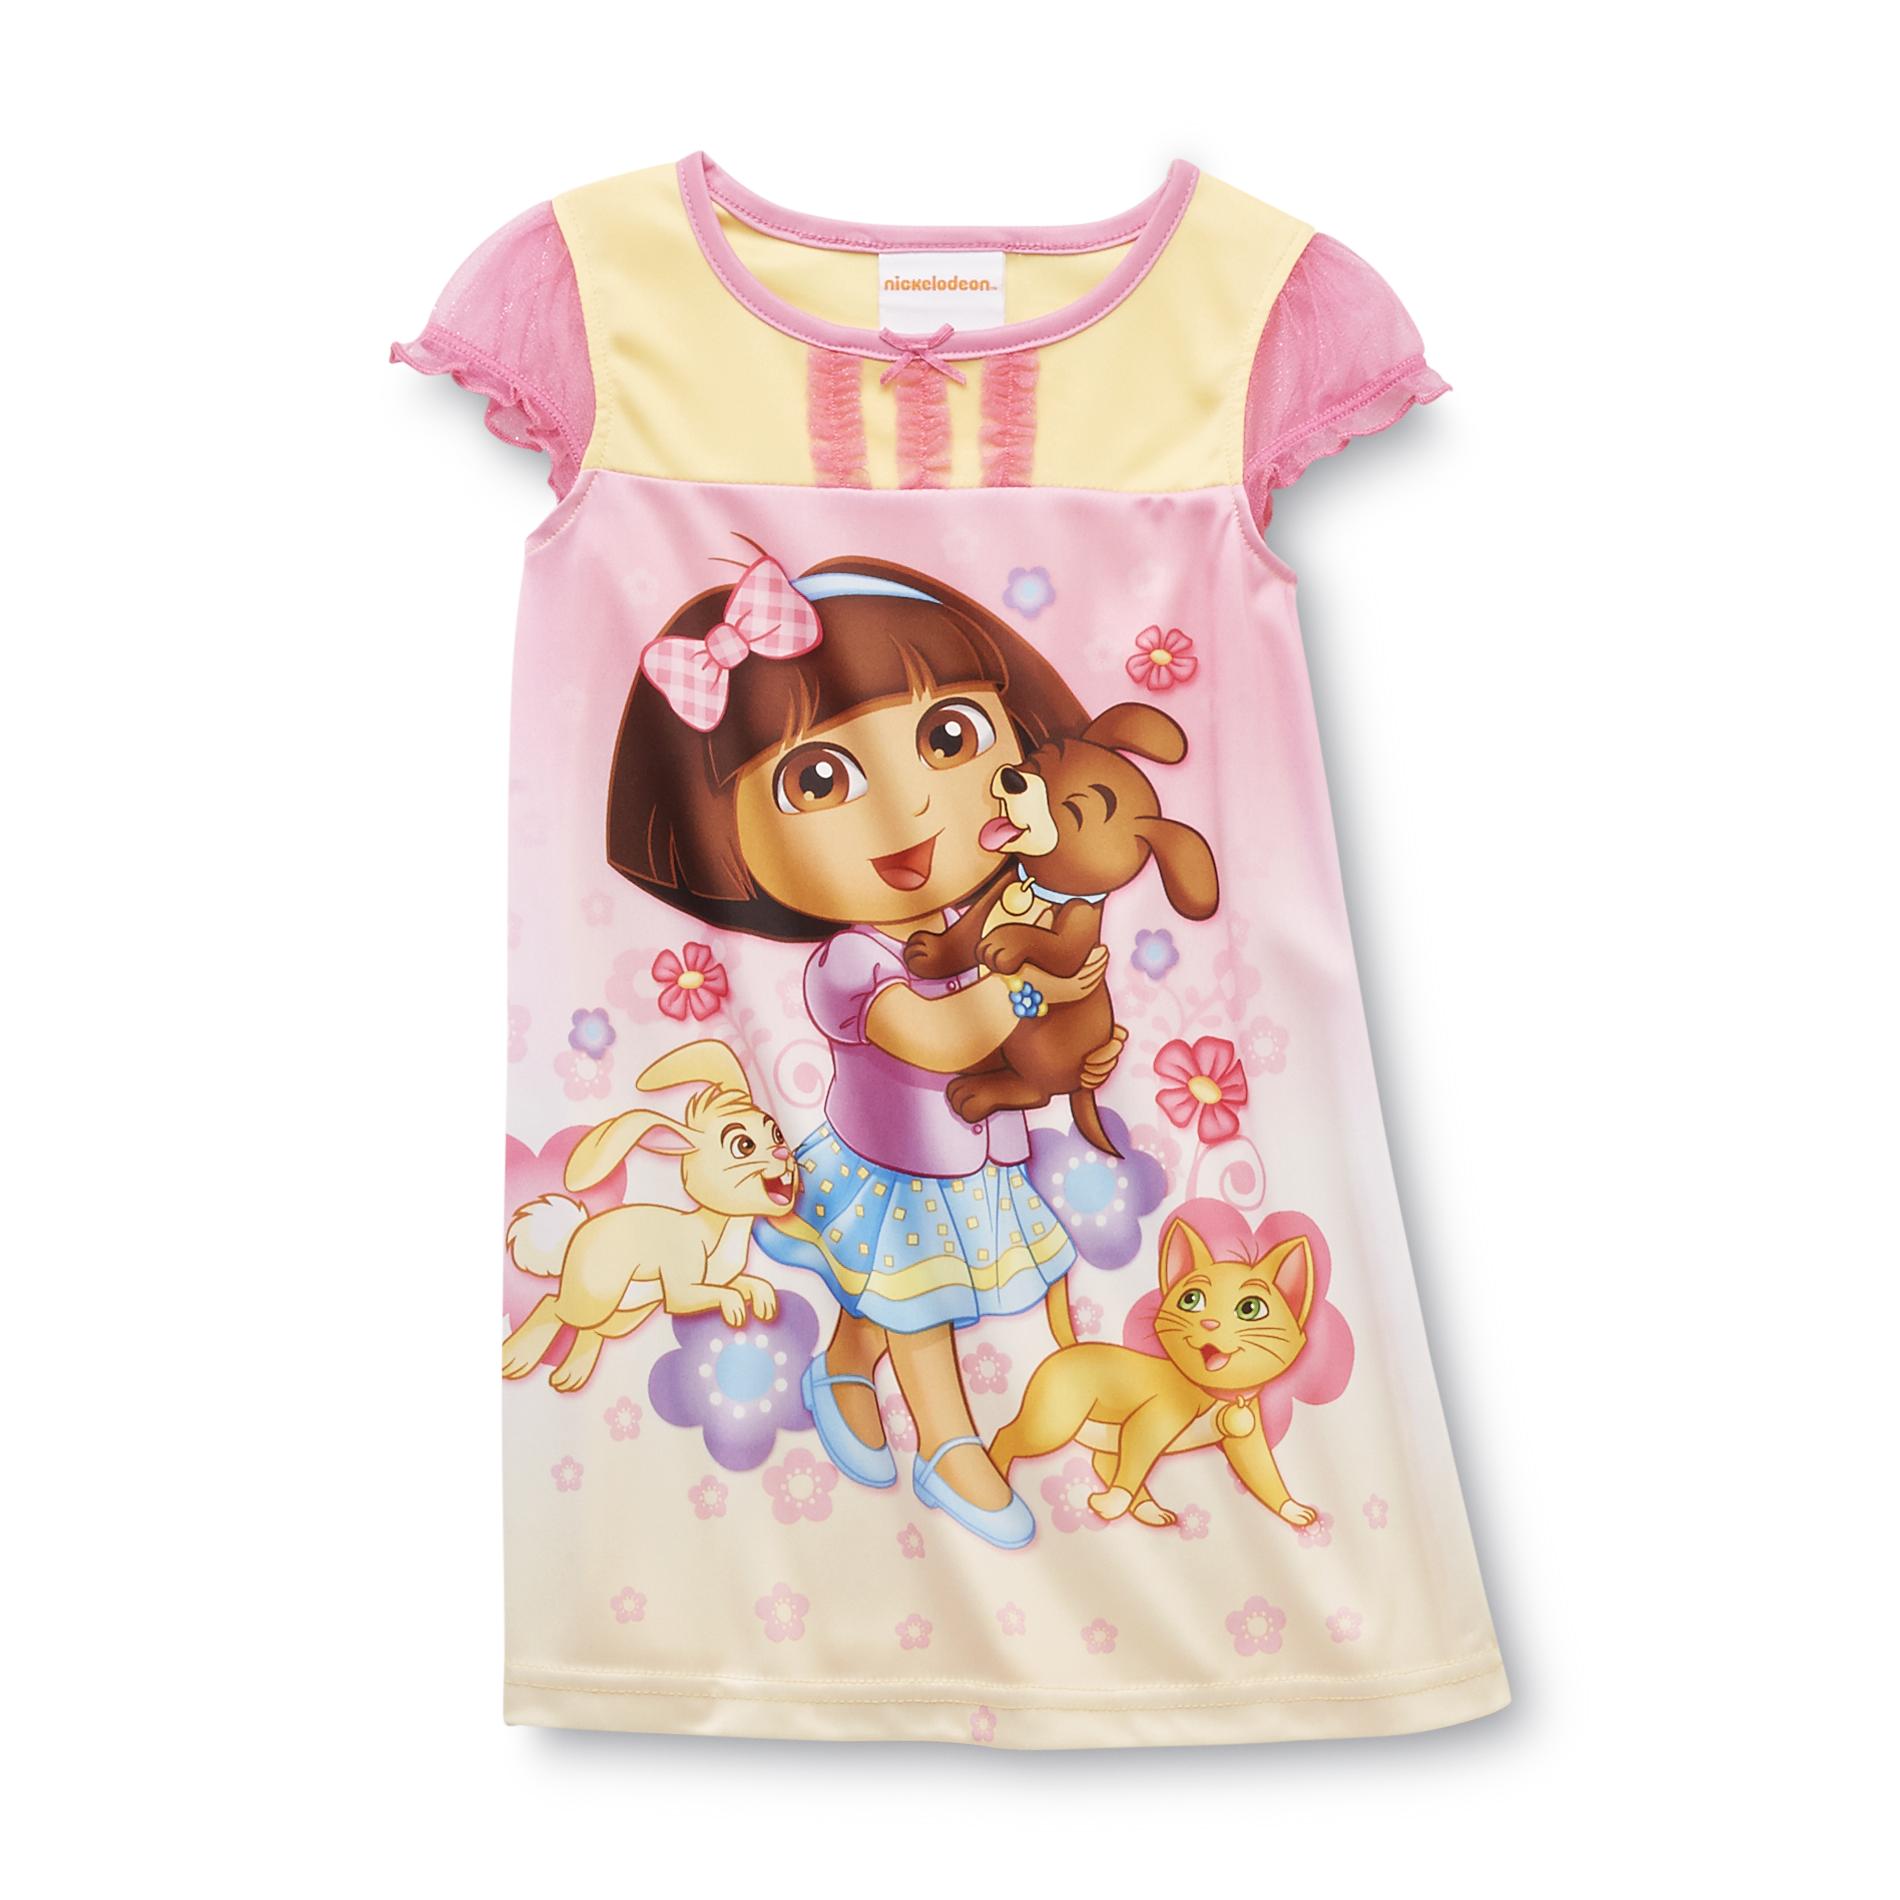 Nickelodeon Dora the Explorer Toddler Girl's Nightgown